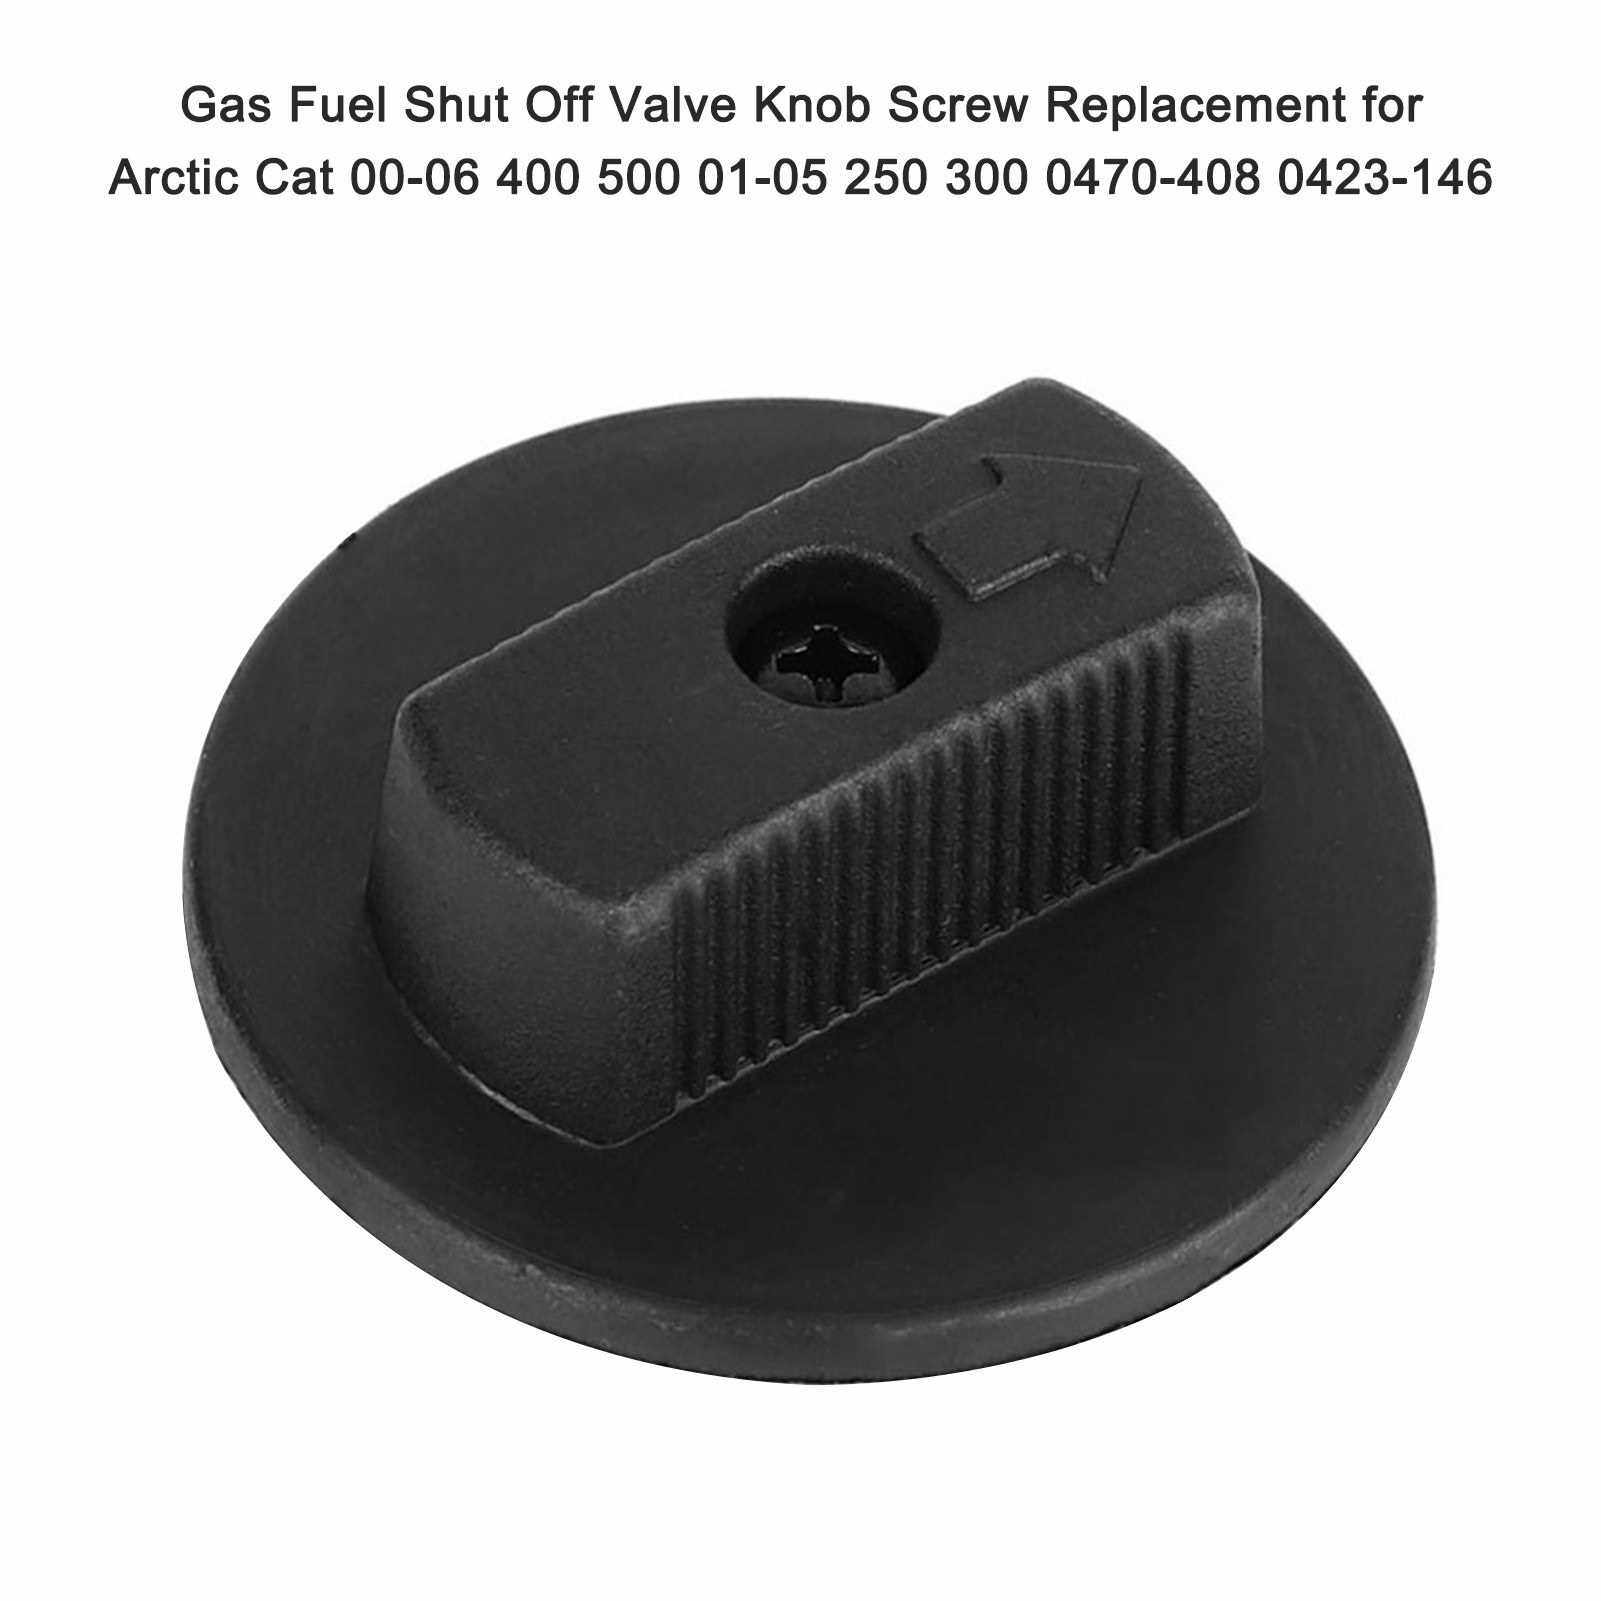 BEST SELLER Gas Fuel Shut Off Valve Knob Screw Replacement for Arctic Cat 00-06 400 500 01-05 250 300 0470-408 0423-146 (Standard)